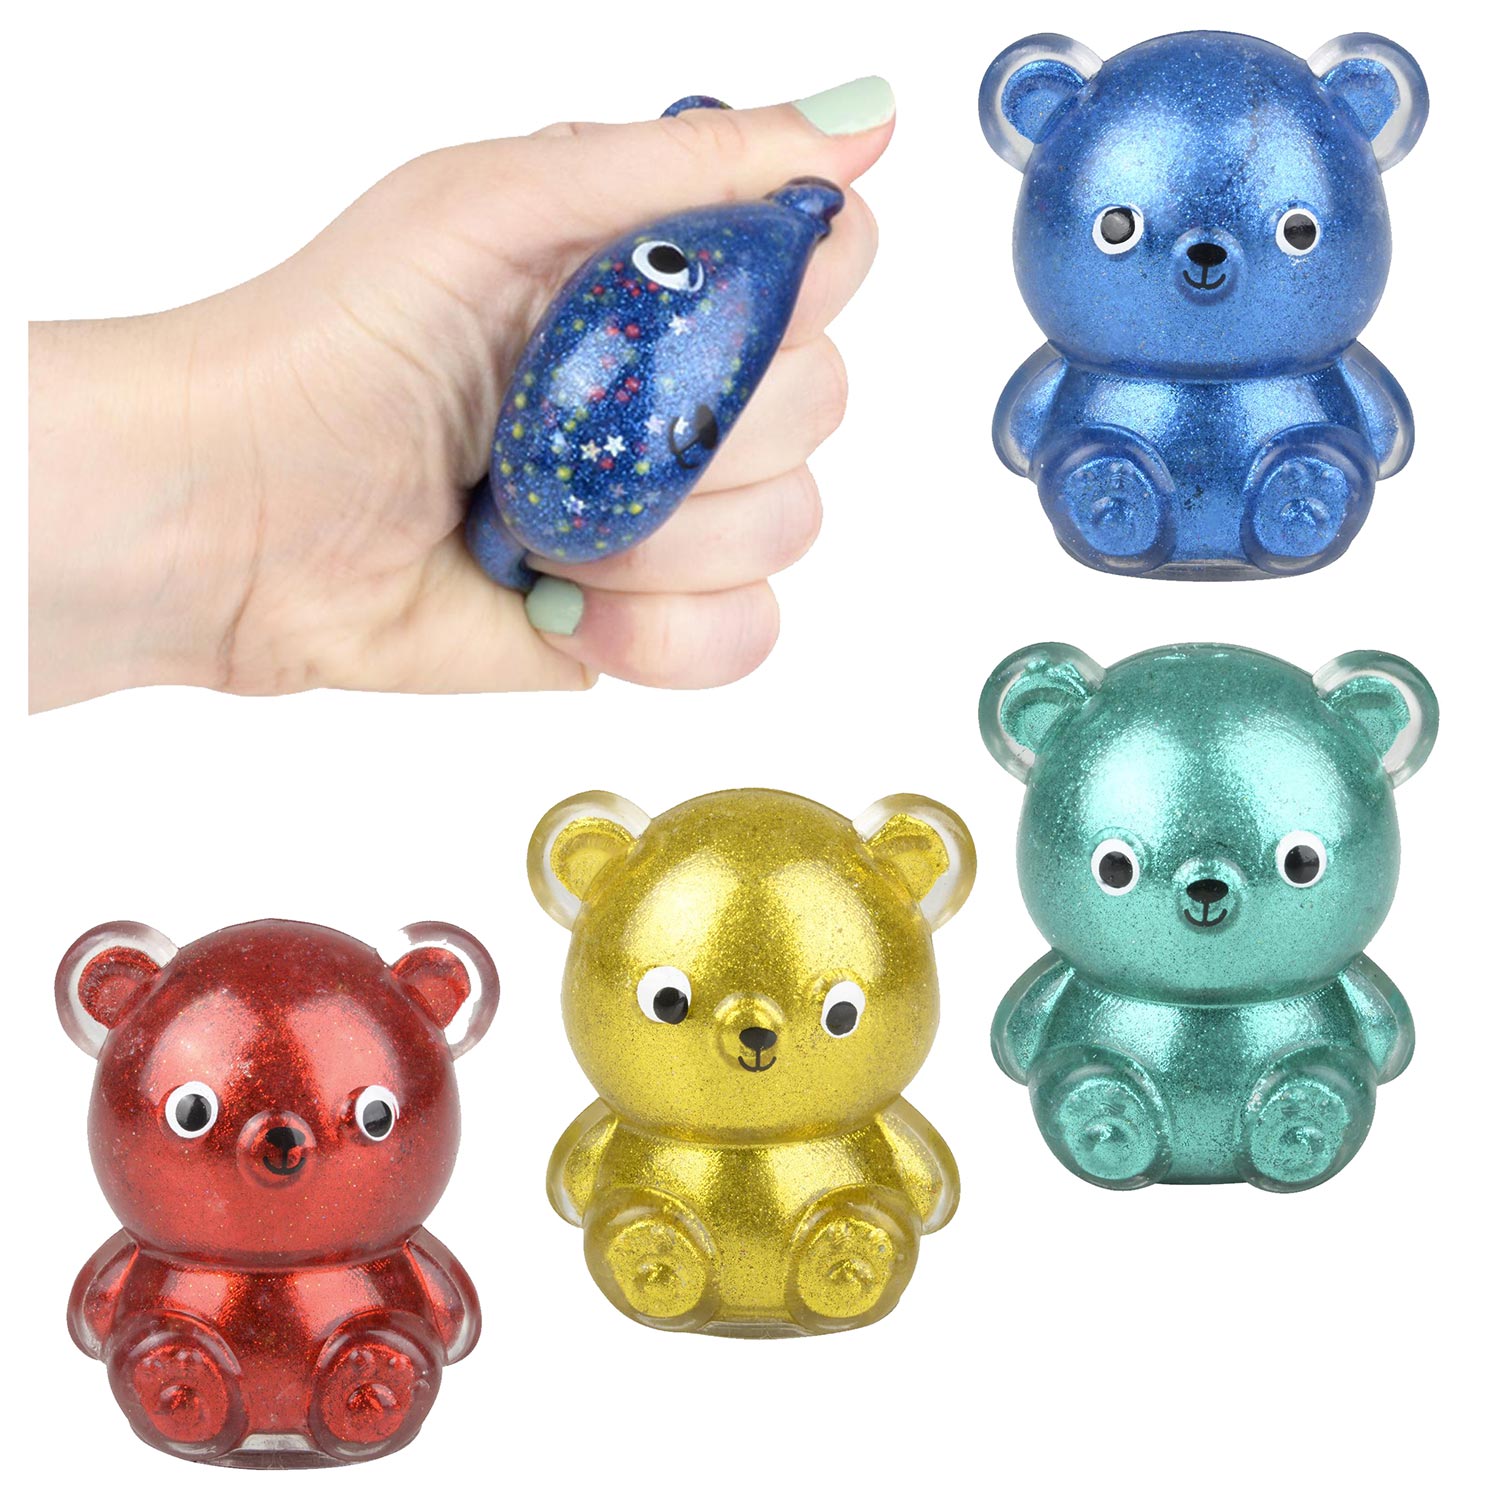 Peck dash Disciplin Squishy Sticky Glitter Bears - 12 Count: Rebecca's Toys & Prizes